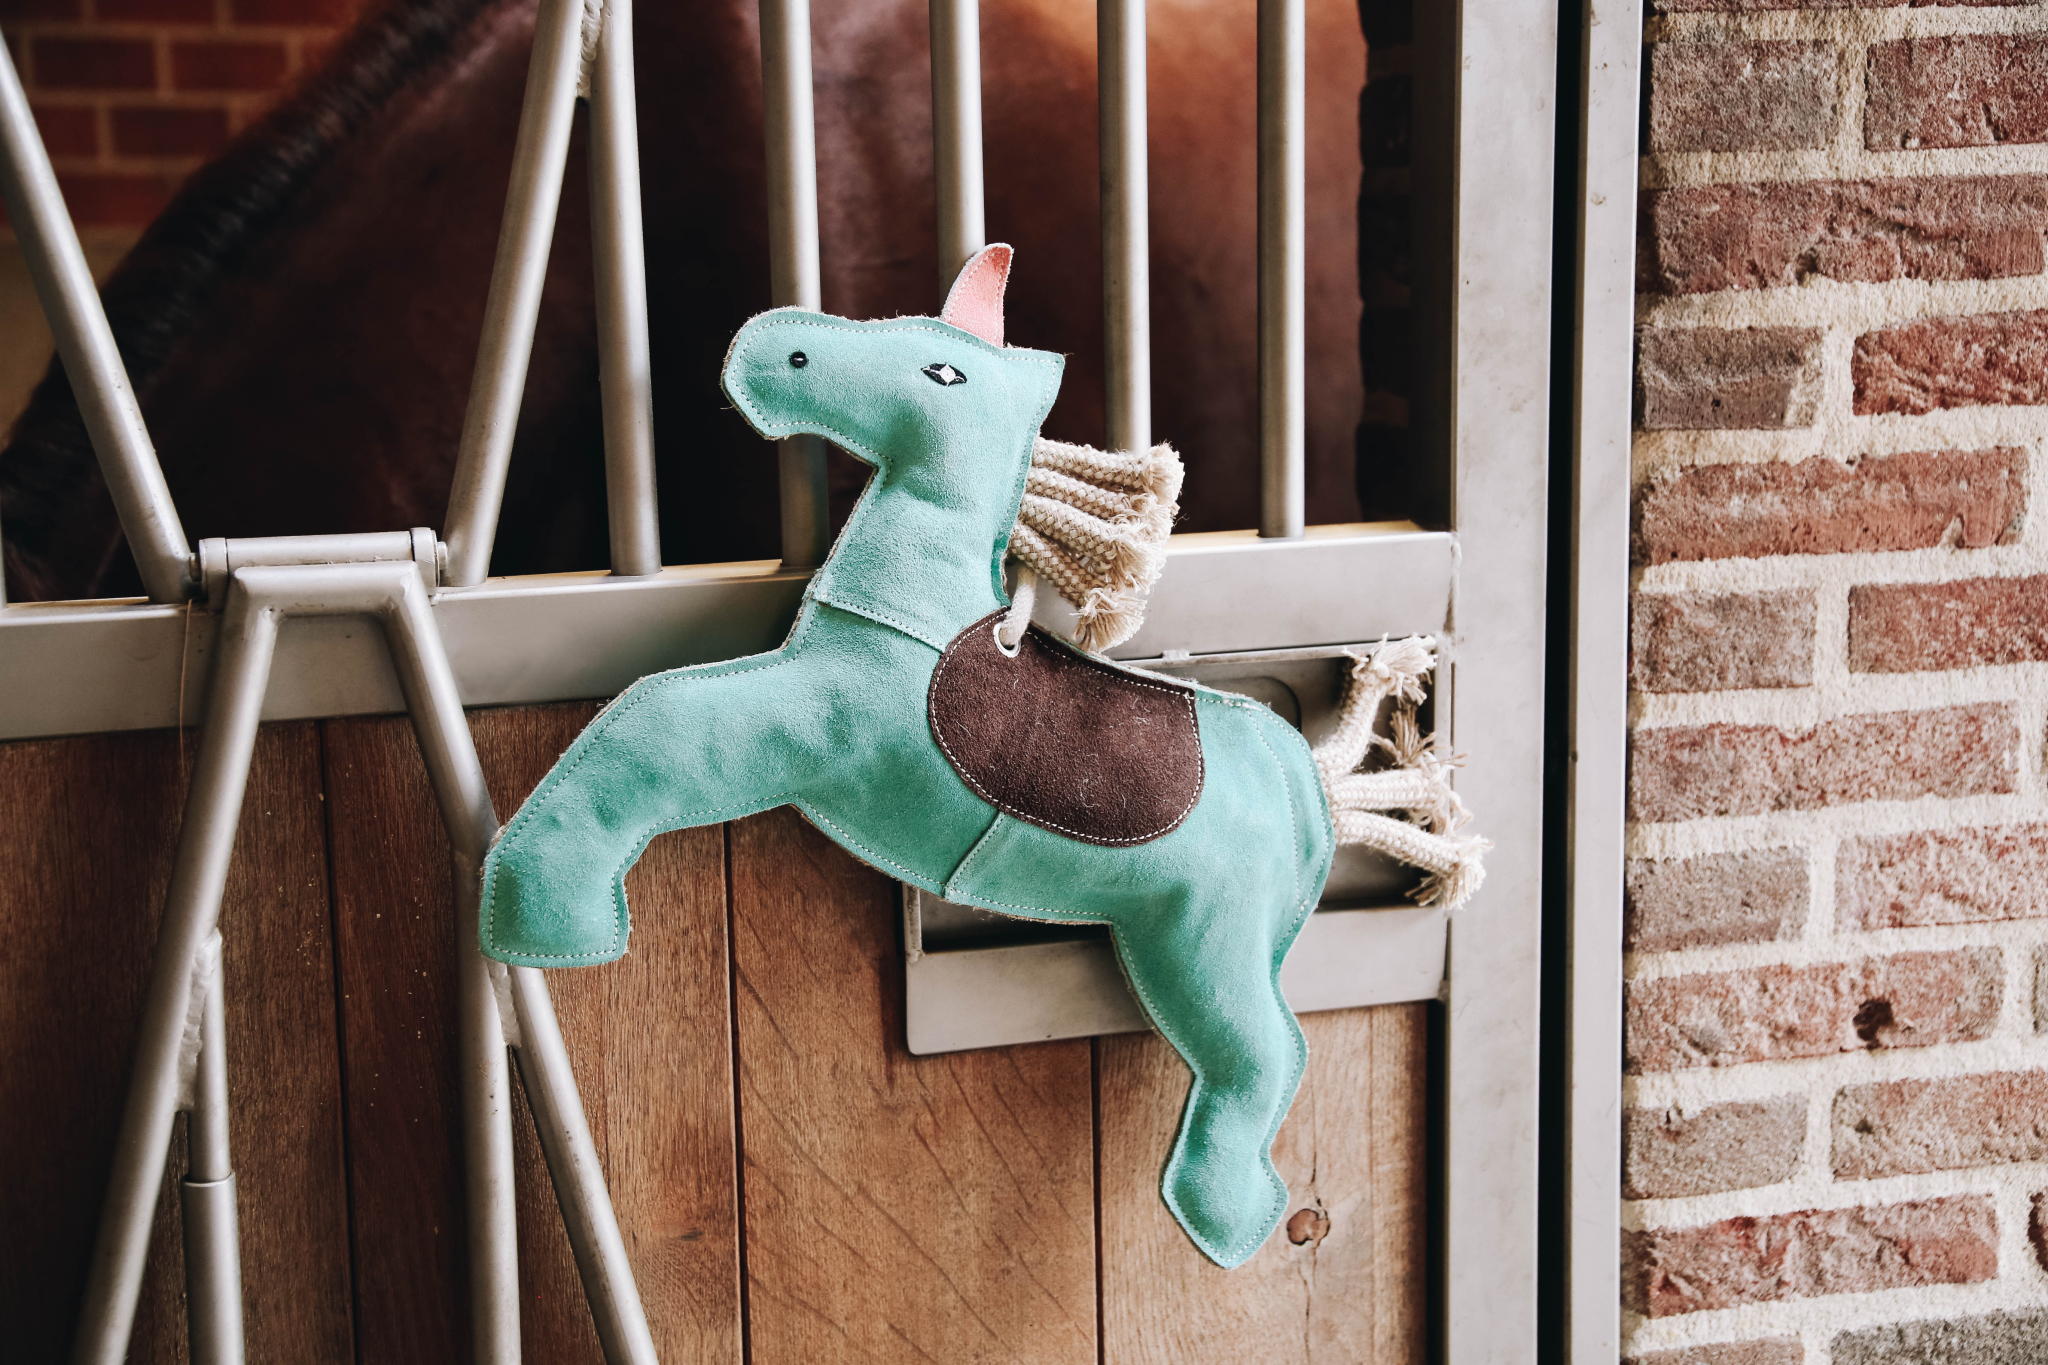 Kentucky Relax Horse Toy Unicorn